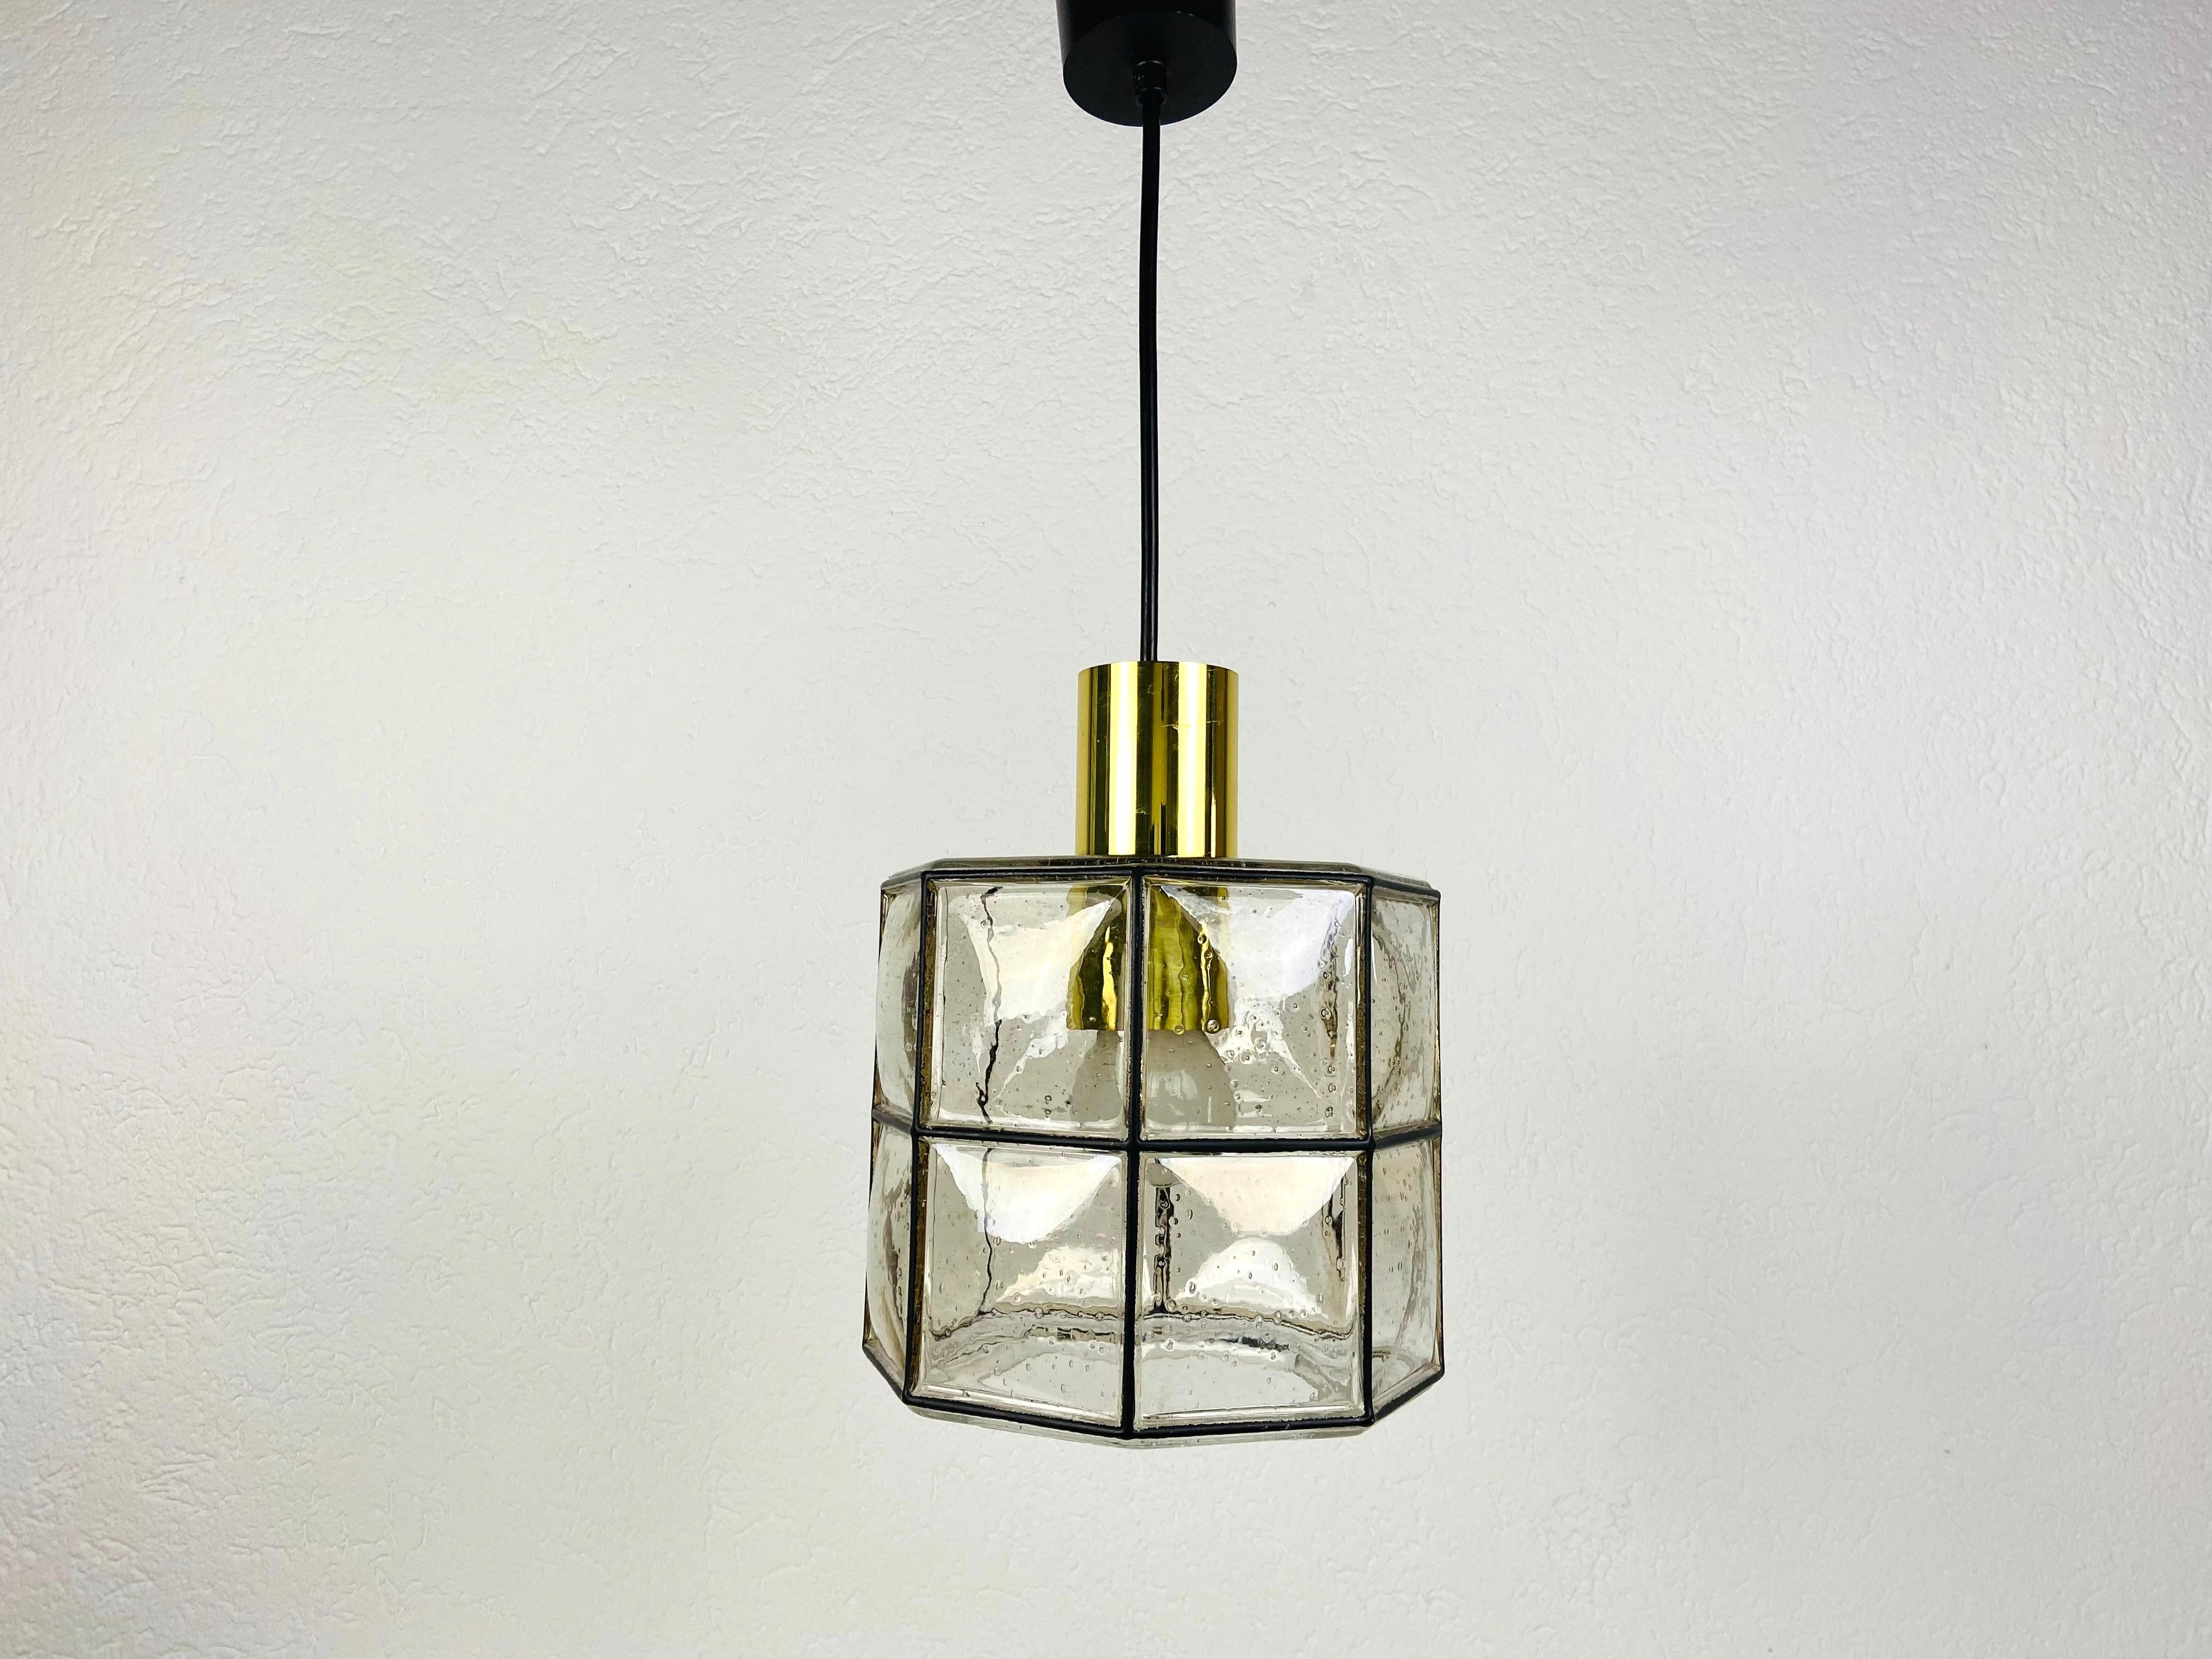 Midcentury Iron and Bubble Glass Pendant Lamp by Glashütte Limburg, 1960s For Sale 4